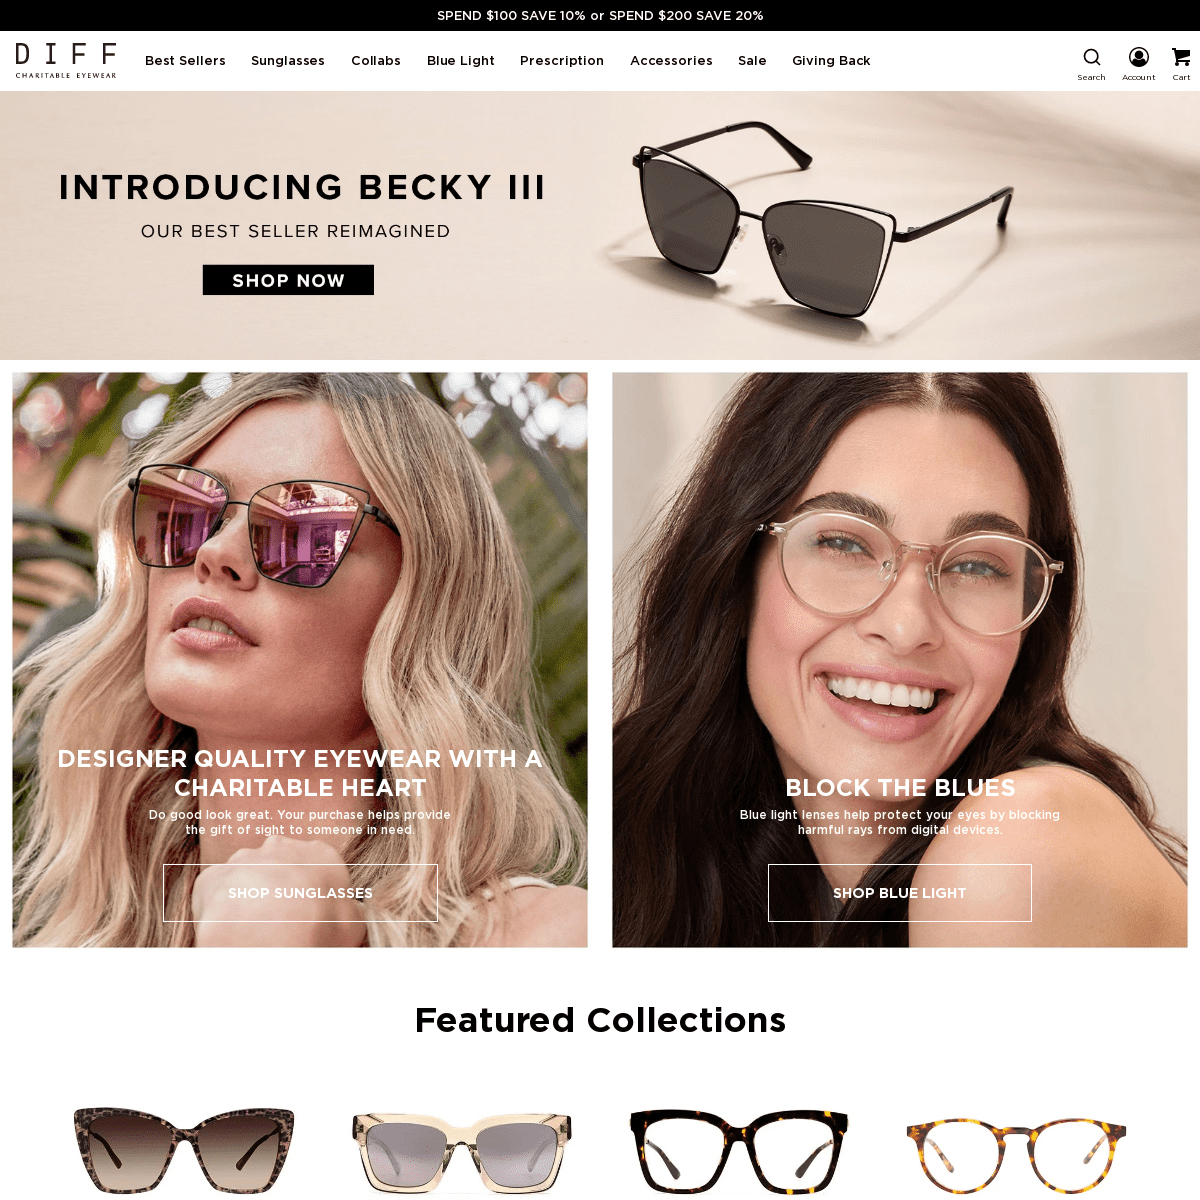 DIFF Eyewear - Charitable Designer Sunglasses That Give Back